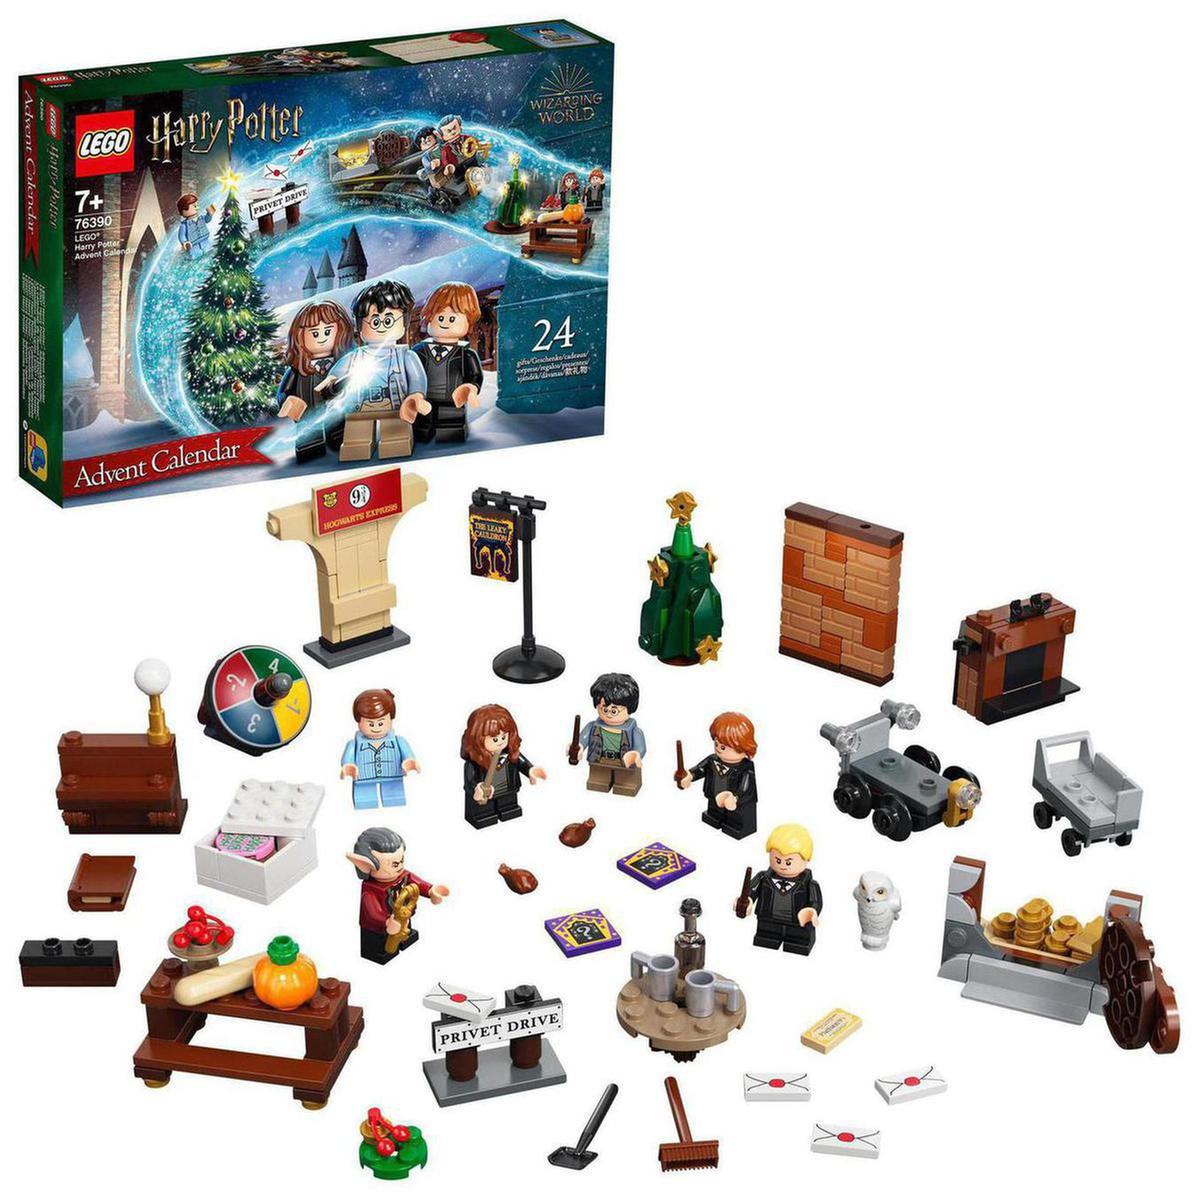 LEGO Harry Potter - Calendario de Adviento - 76939 | Lego Harry Potter |  Toys"R"Us España